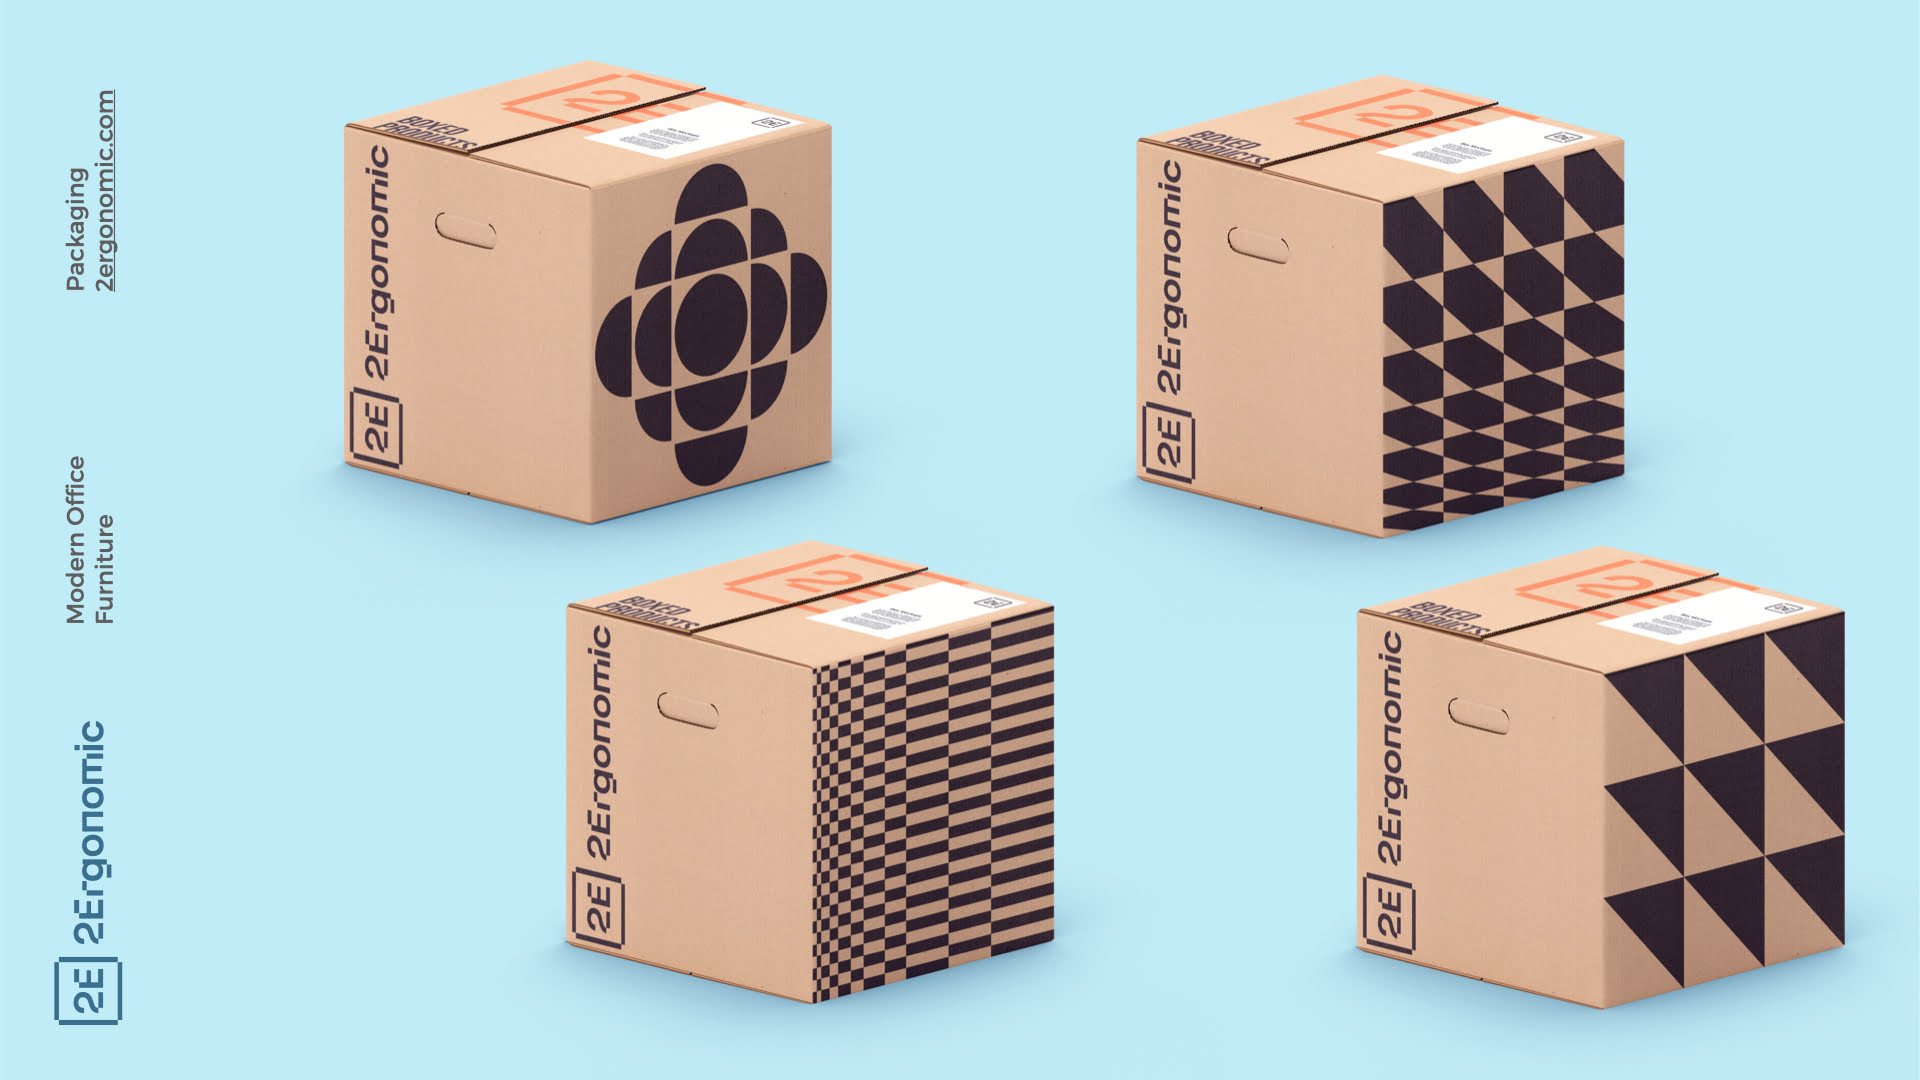 2Ergo packaging pattern